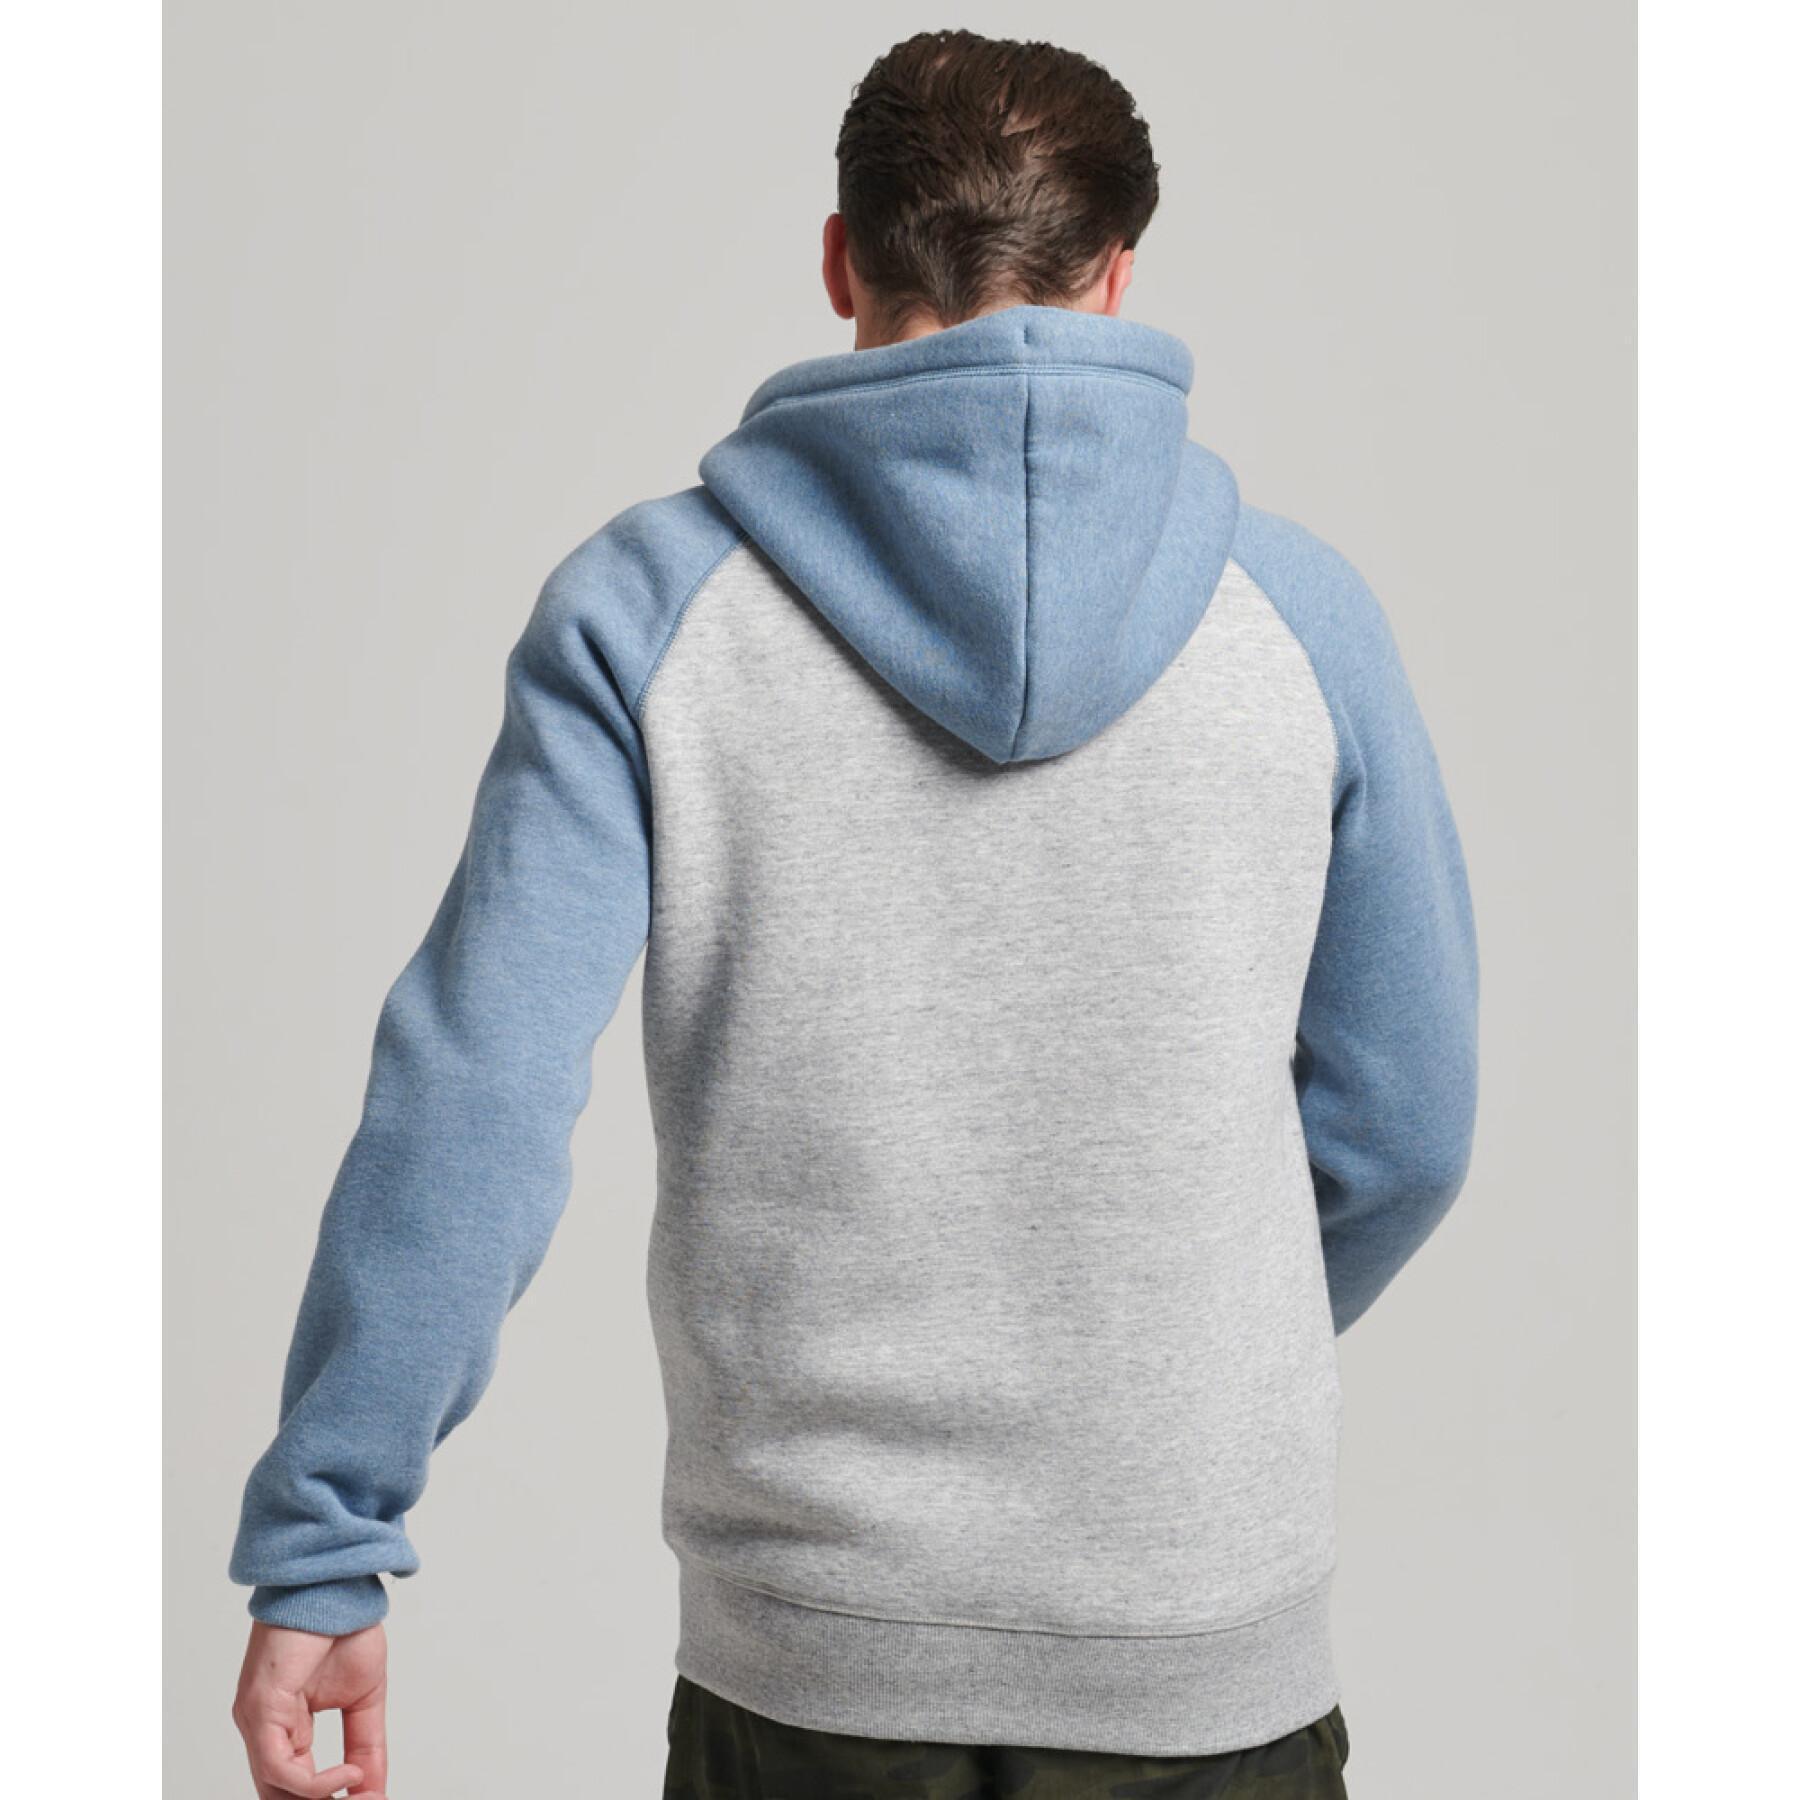 Hooded sweatshirt with zipper, baseball style, organic cotton Superdry Vintage Logo